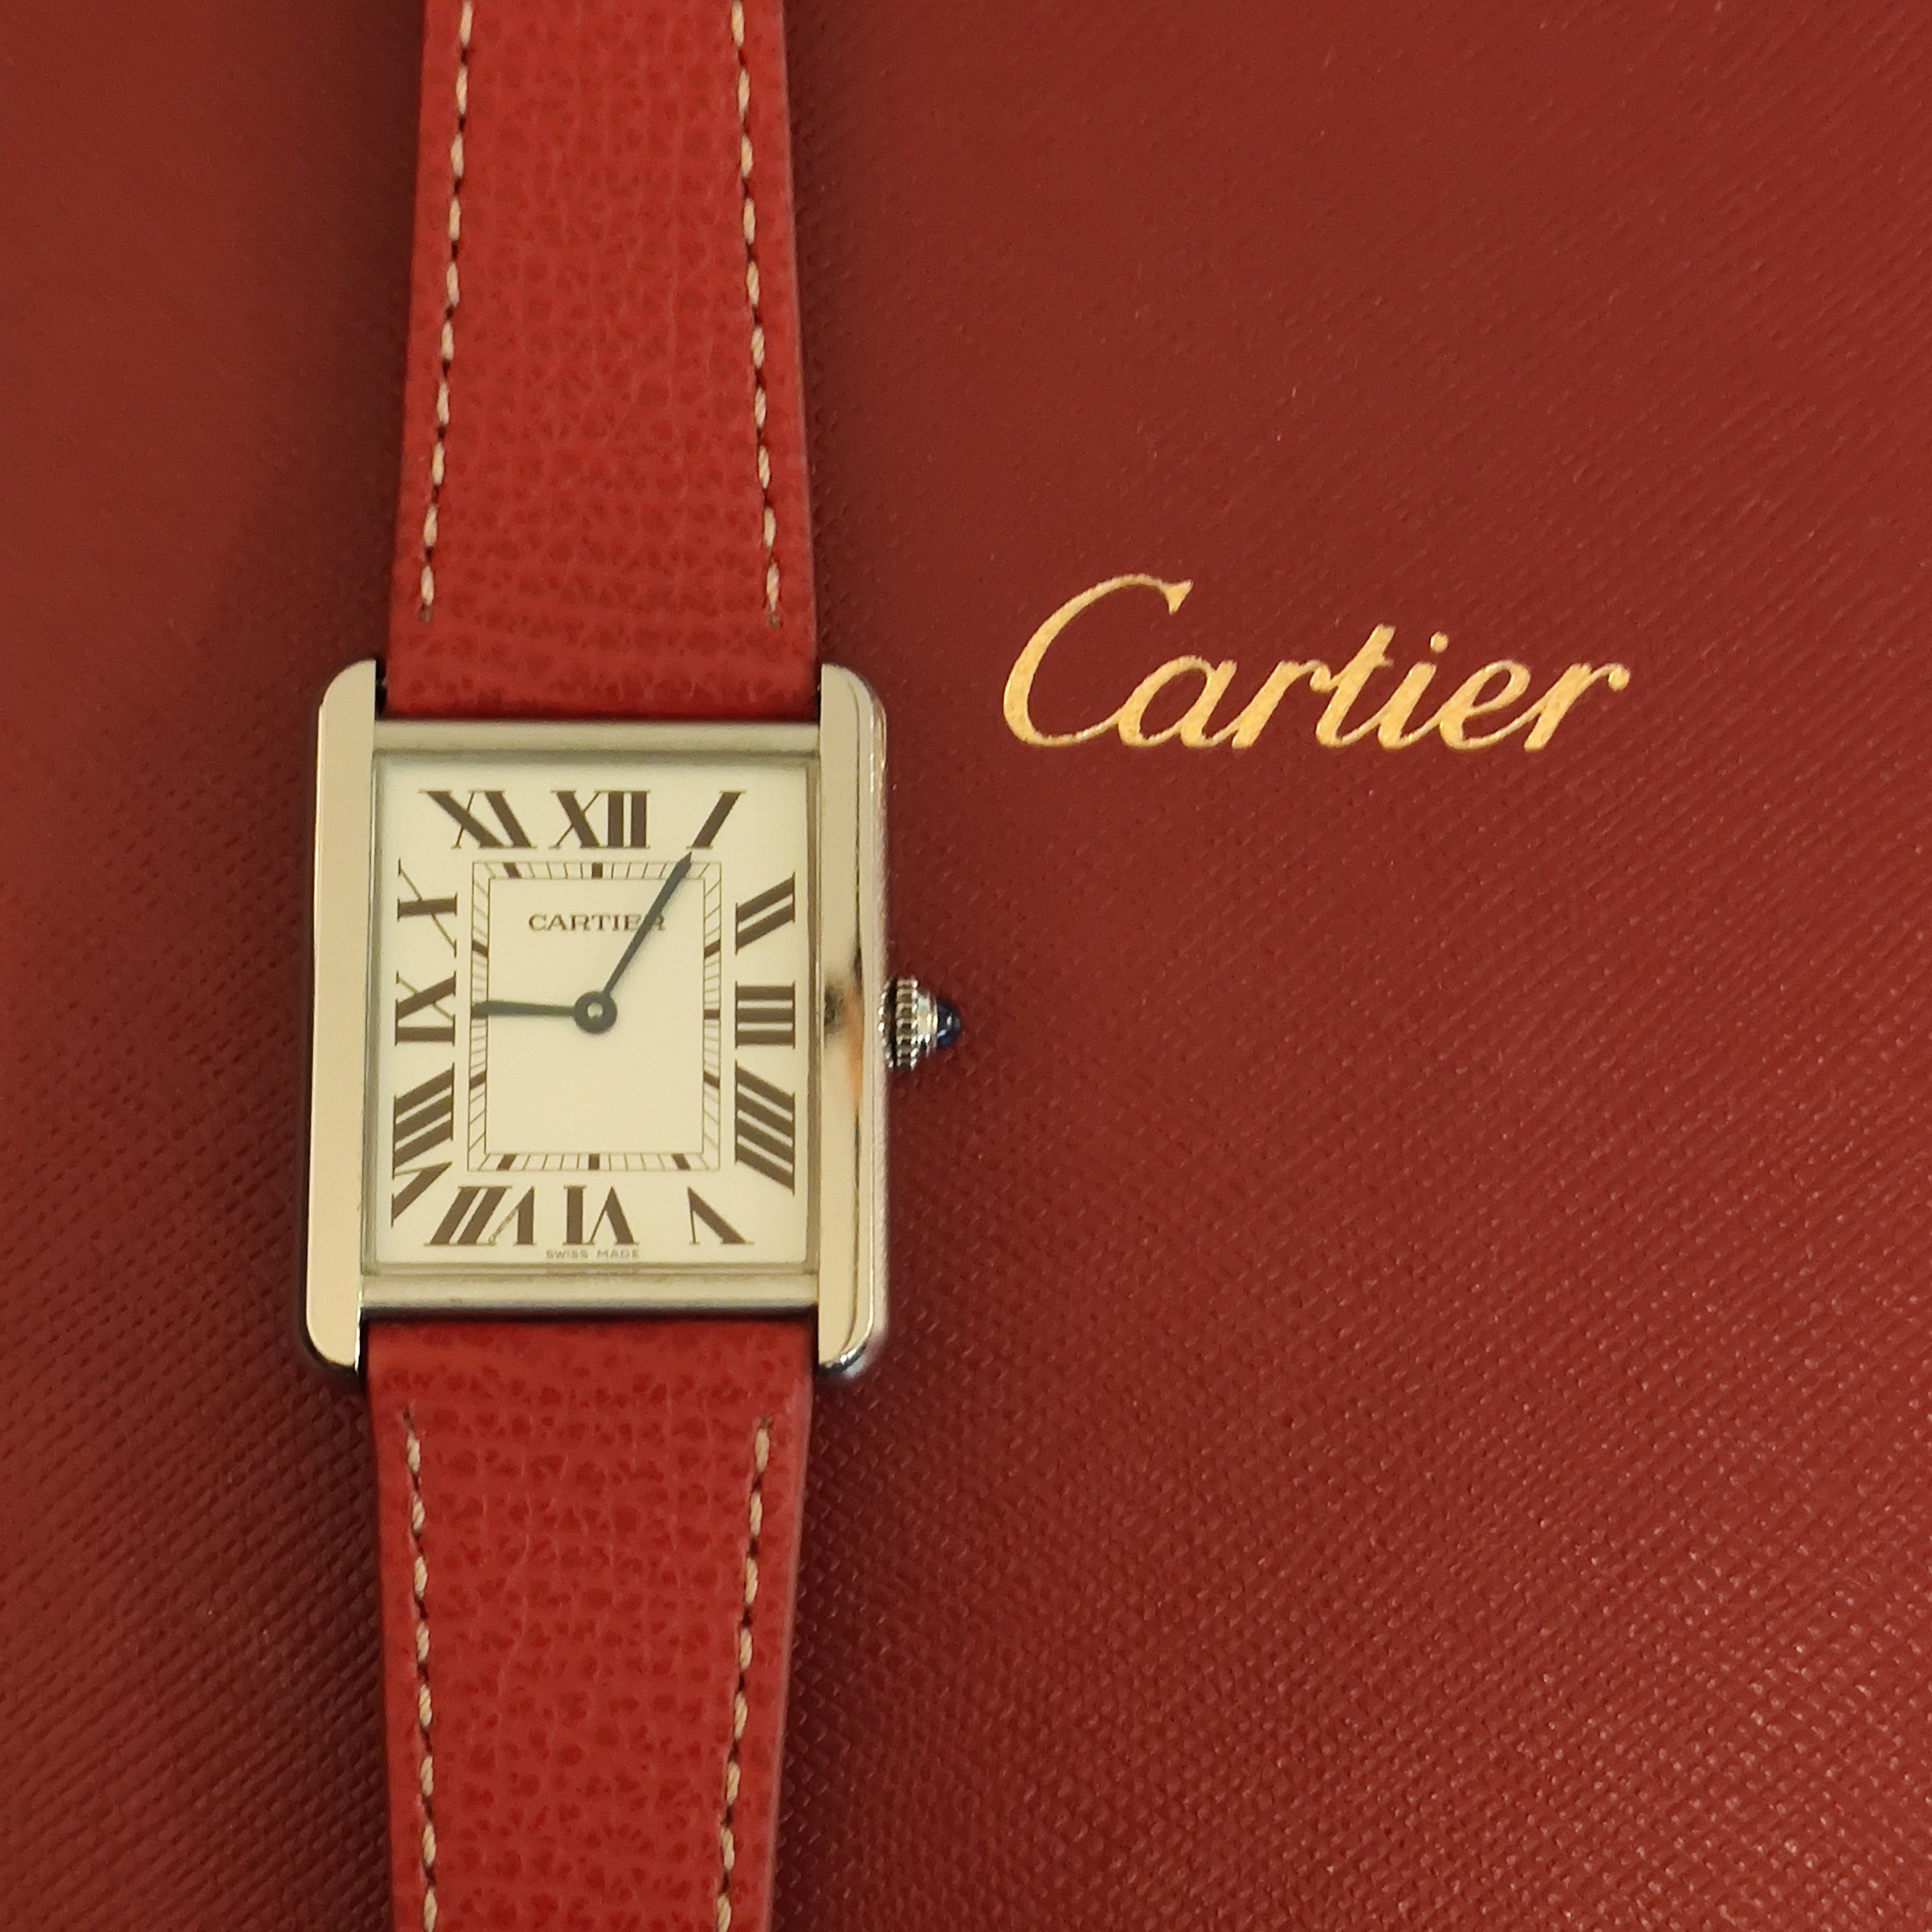 Cartier on Vario vintage Italian strap!